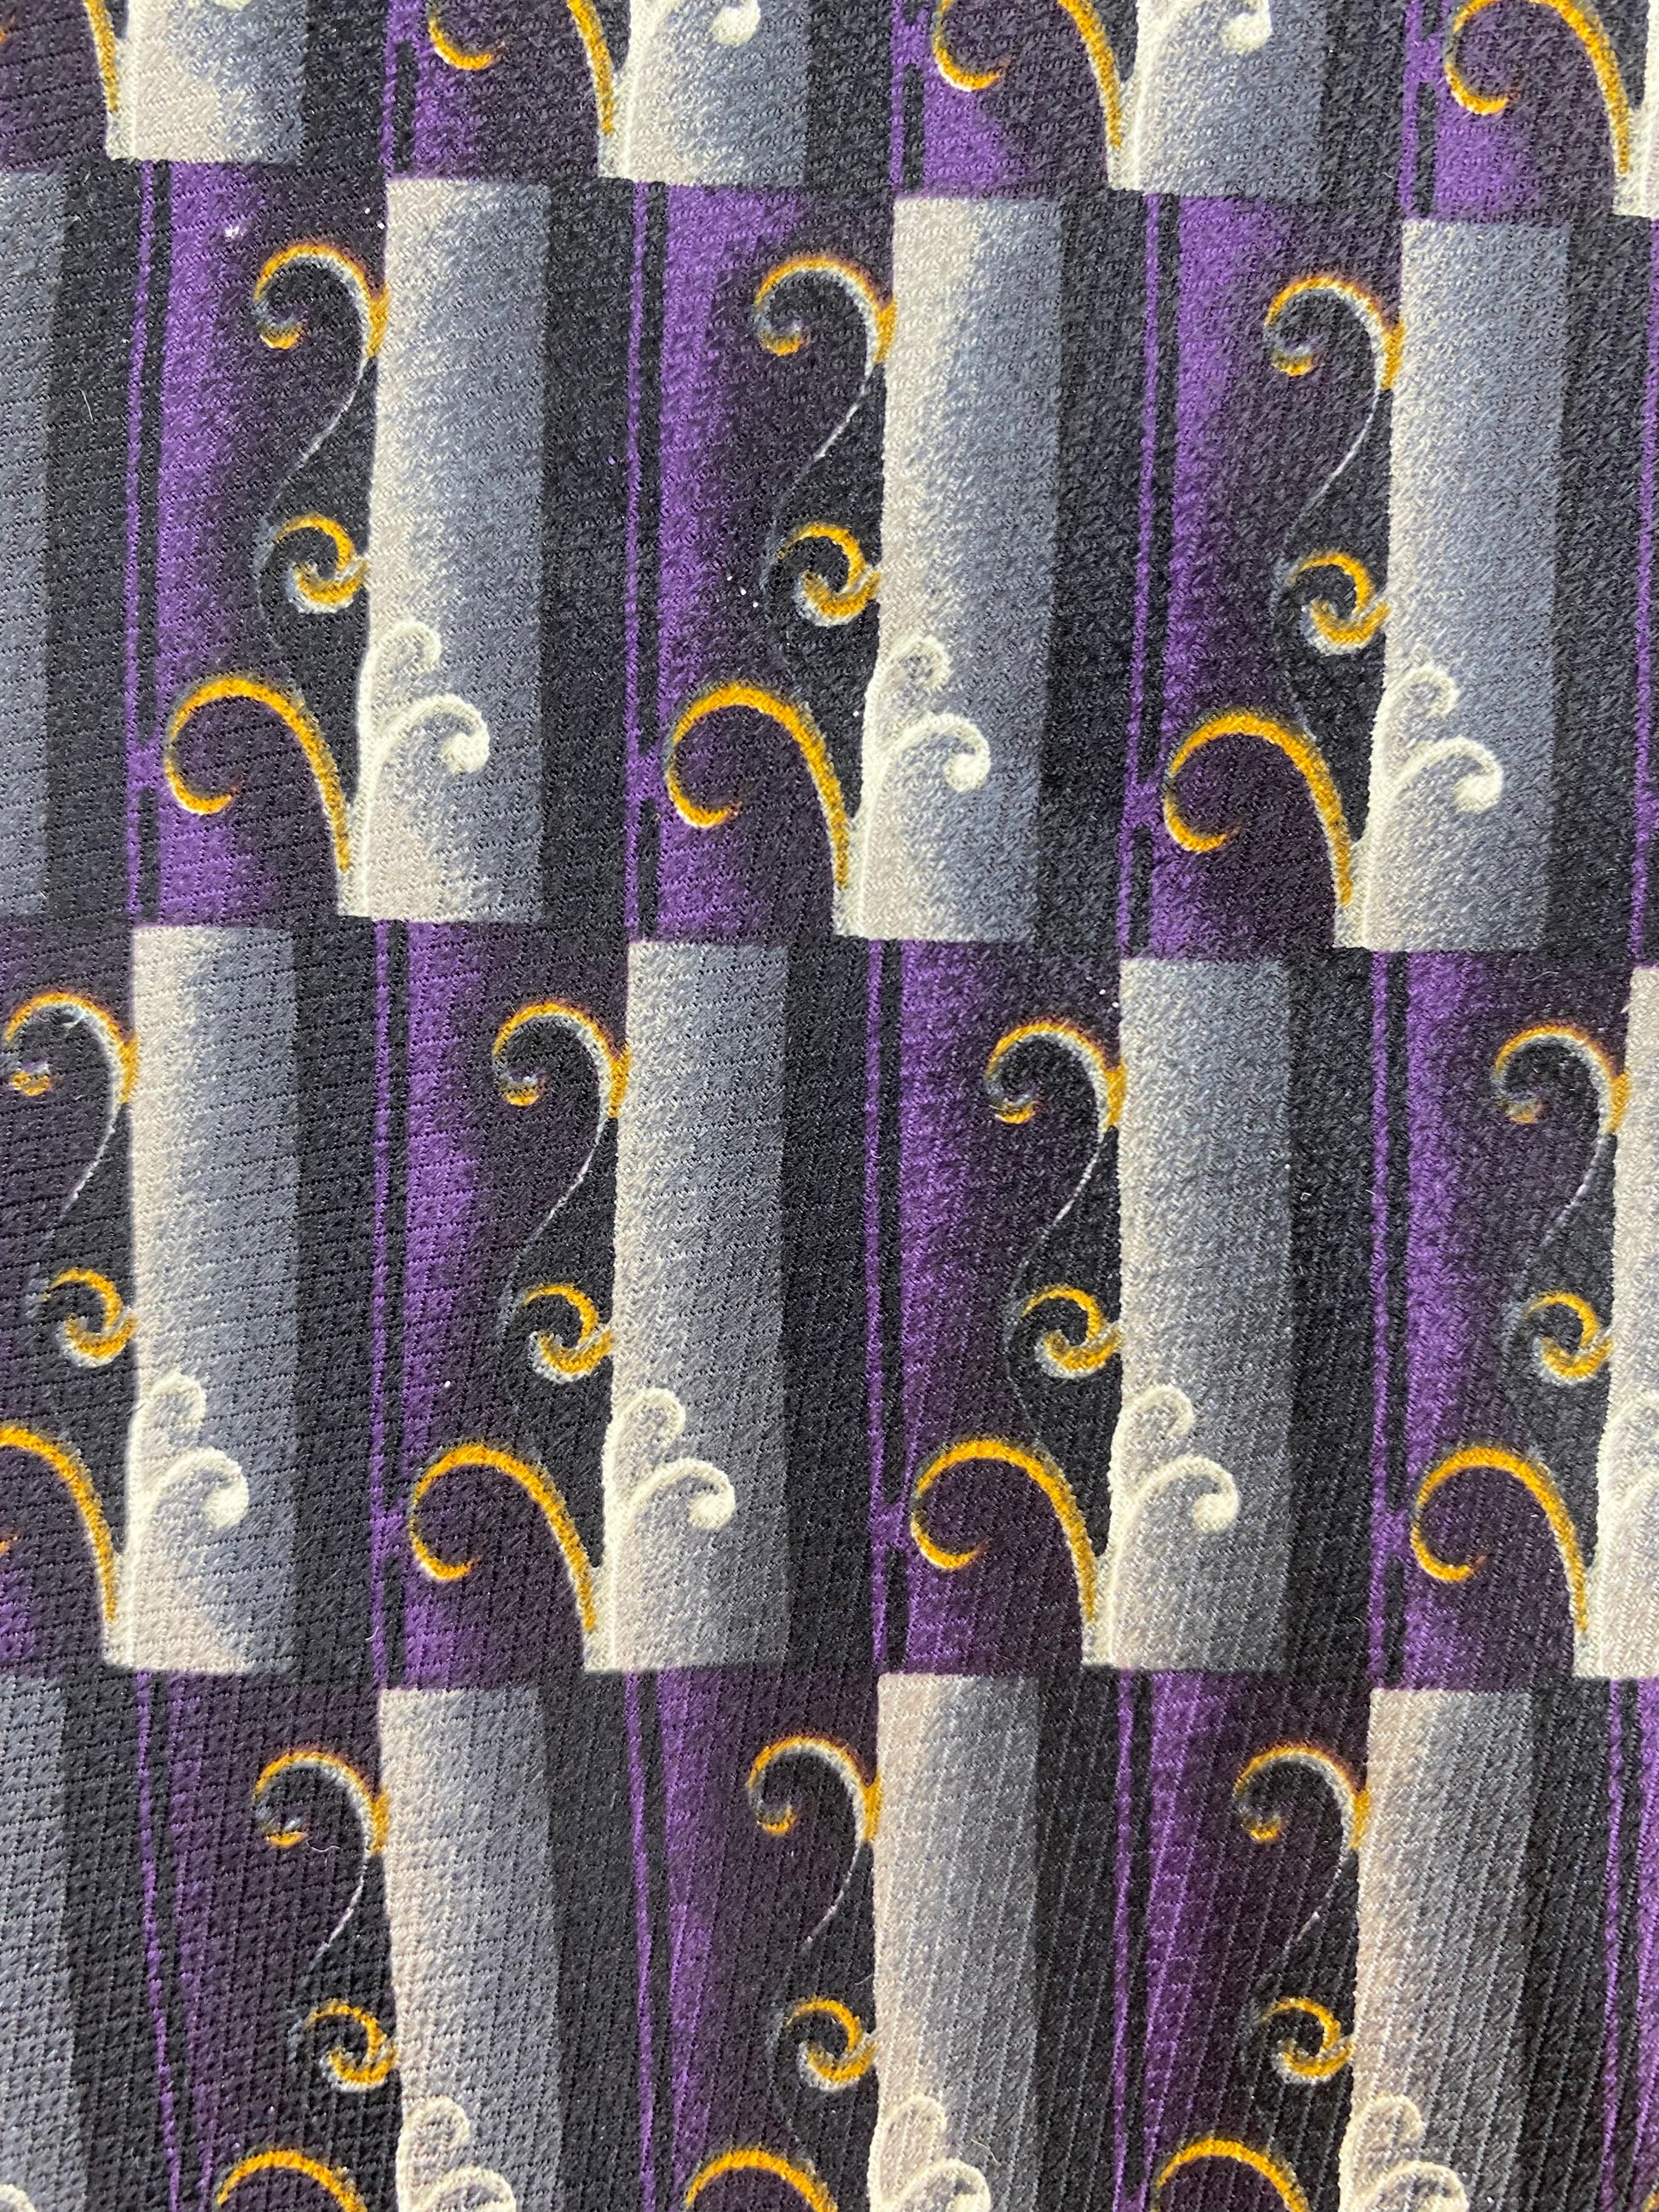 90s Deadstock Silk Necktie, Men's Vintage Purple/ Black/ Grey Filigree Pattern Tie, NOS